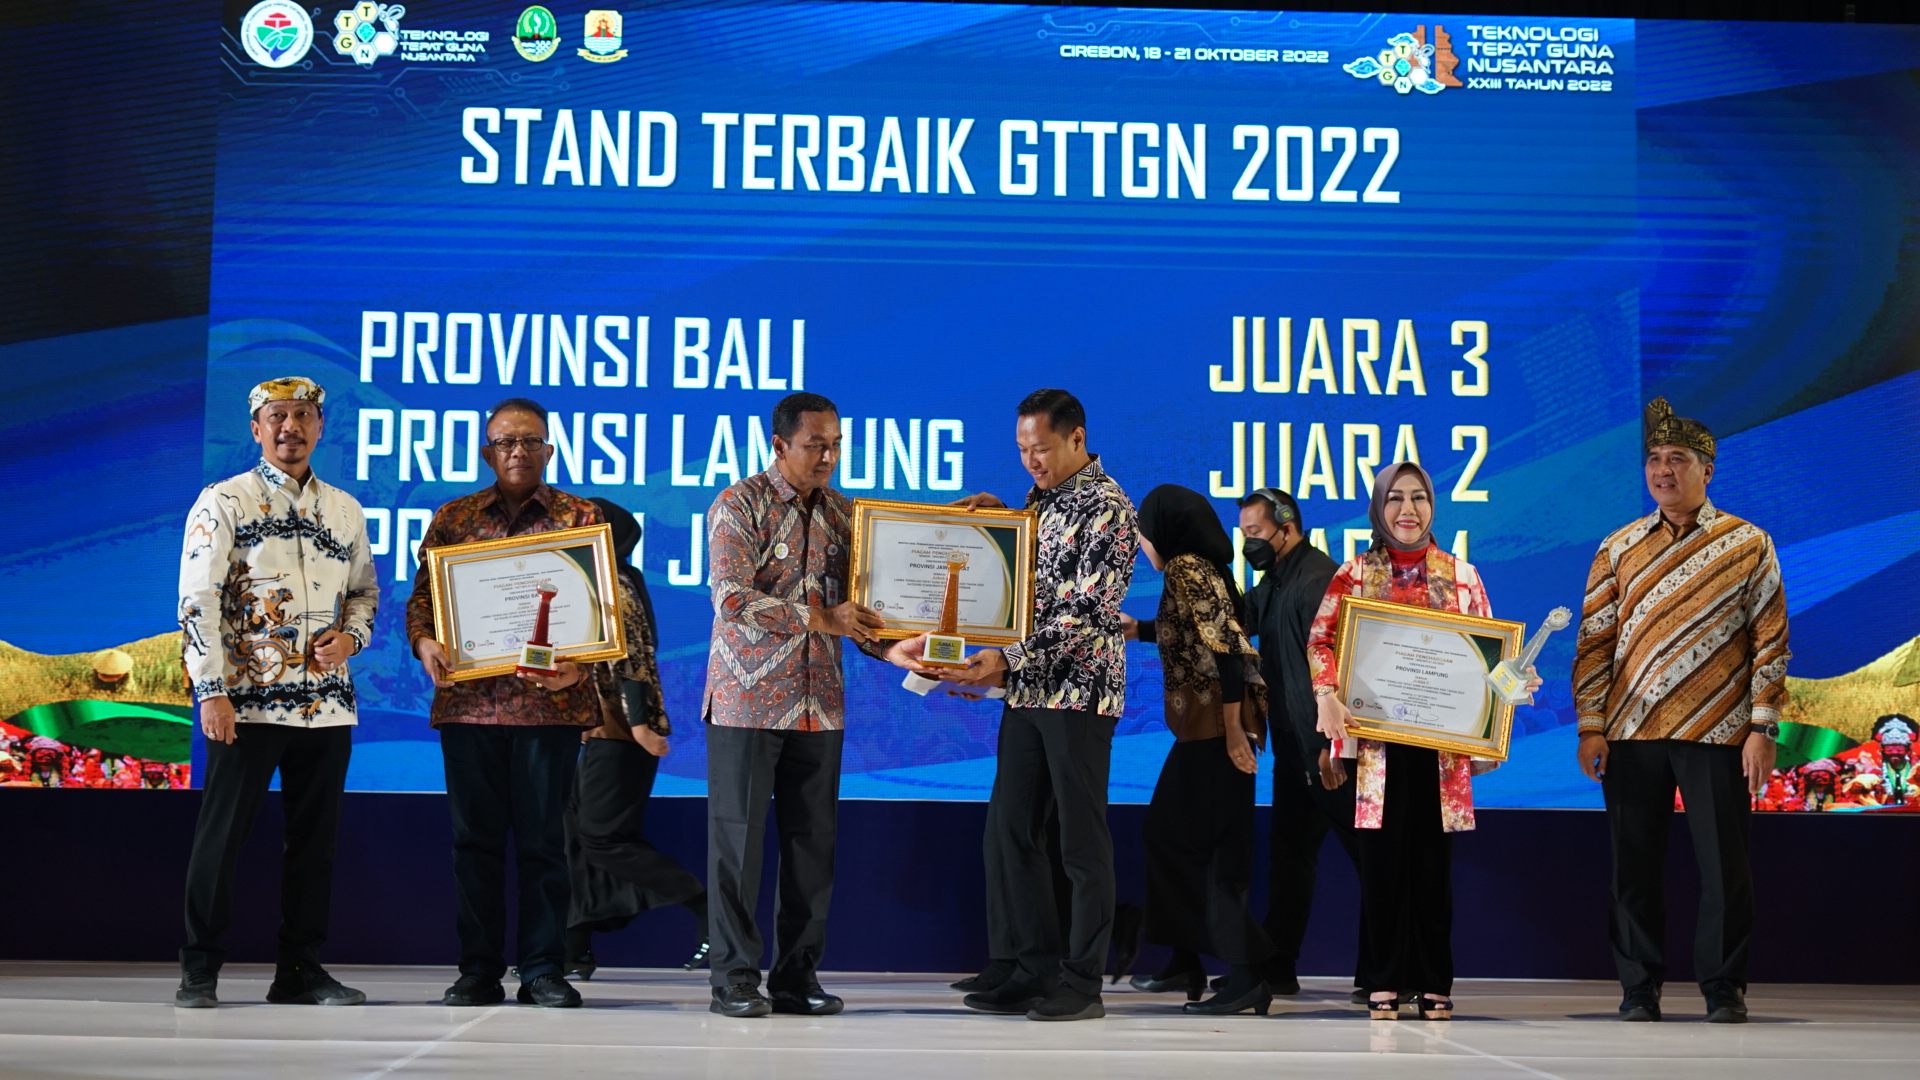 Juara I Stand Terbaik gelar TTG Nusantara 2022 diarih Provinsi Jawa Barat - (Humas DPMD Jabar)